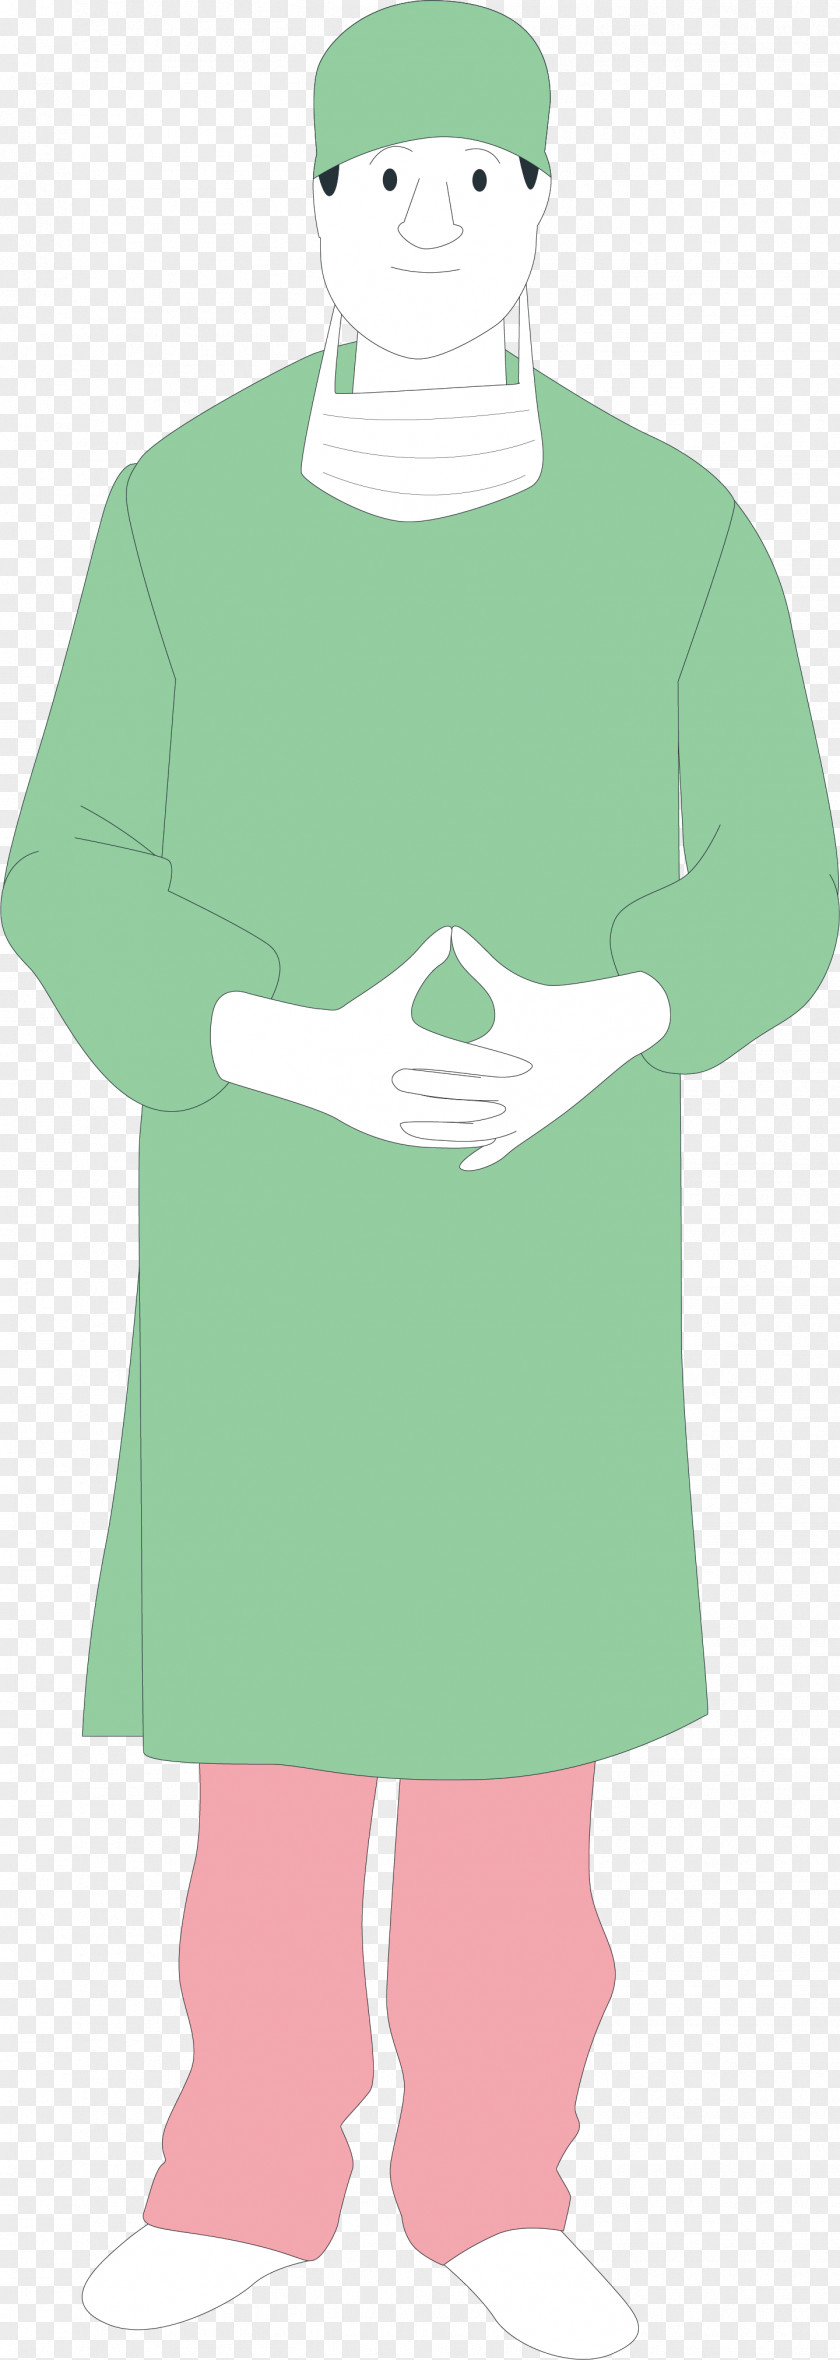 T-shirt Sleeve Character Cartoon Green PNG